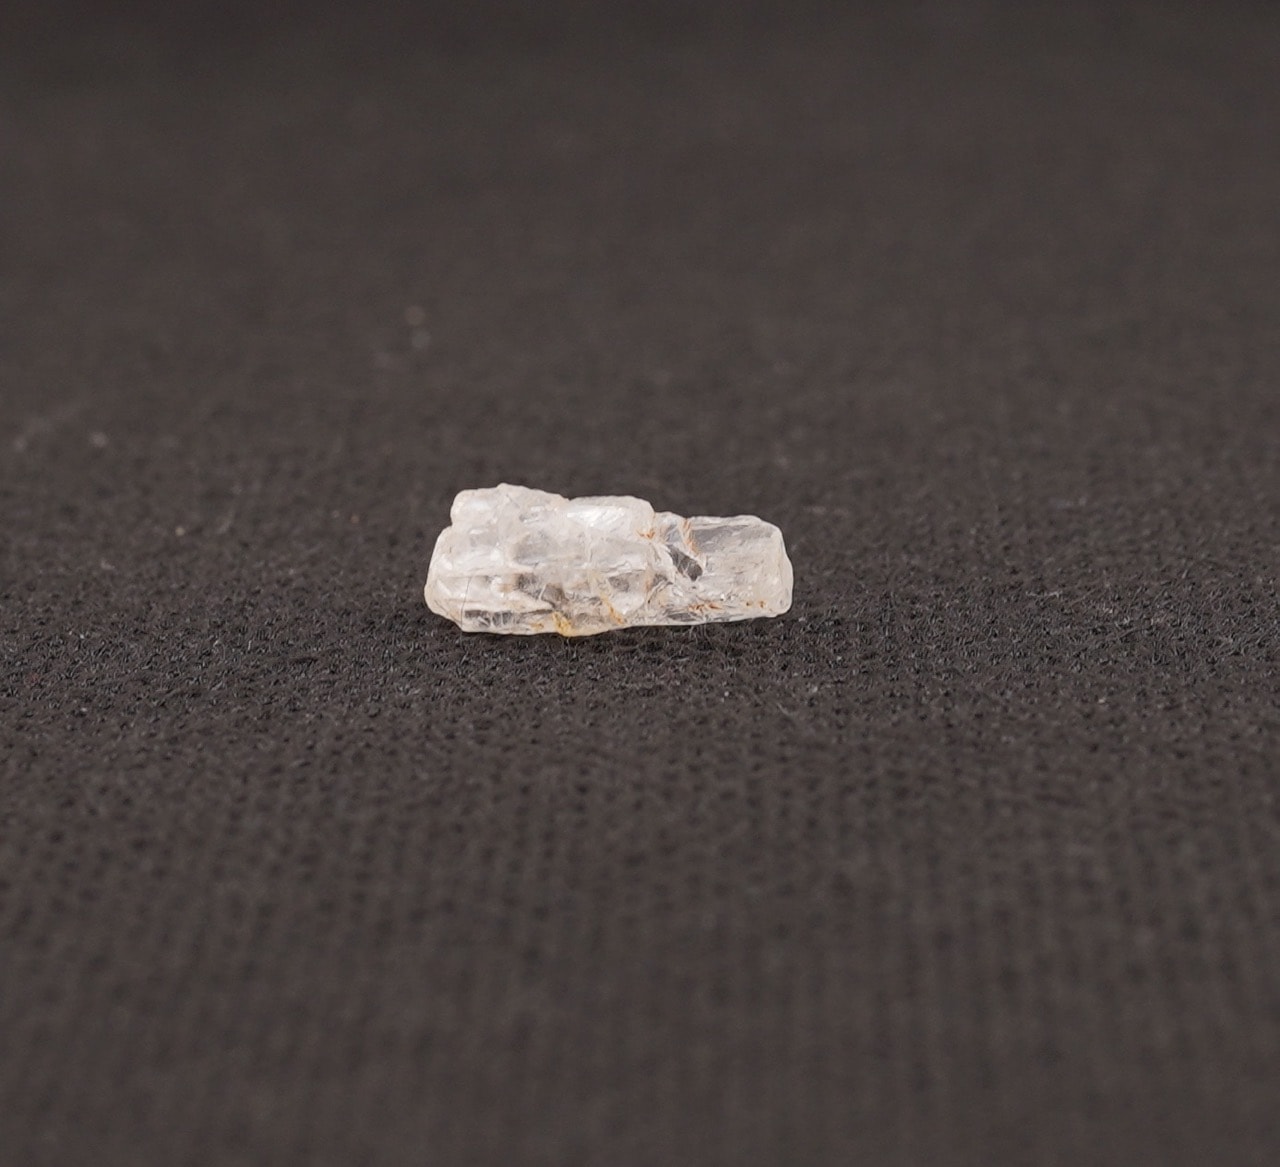 Fenacit nigerian cristal natural unicat f261